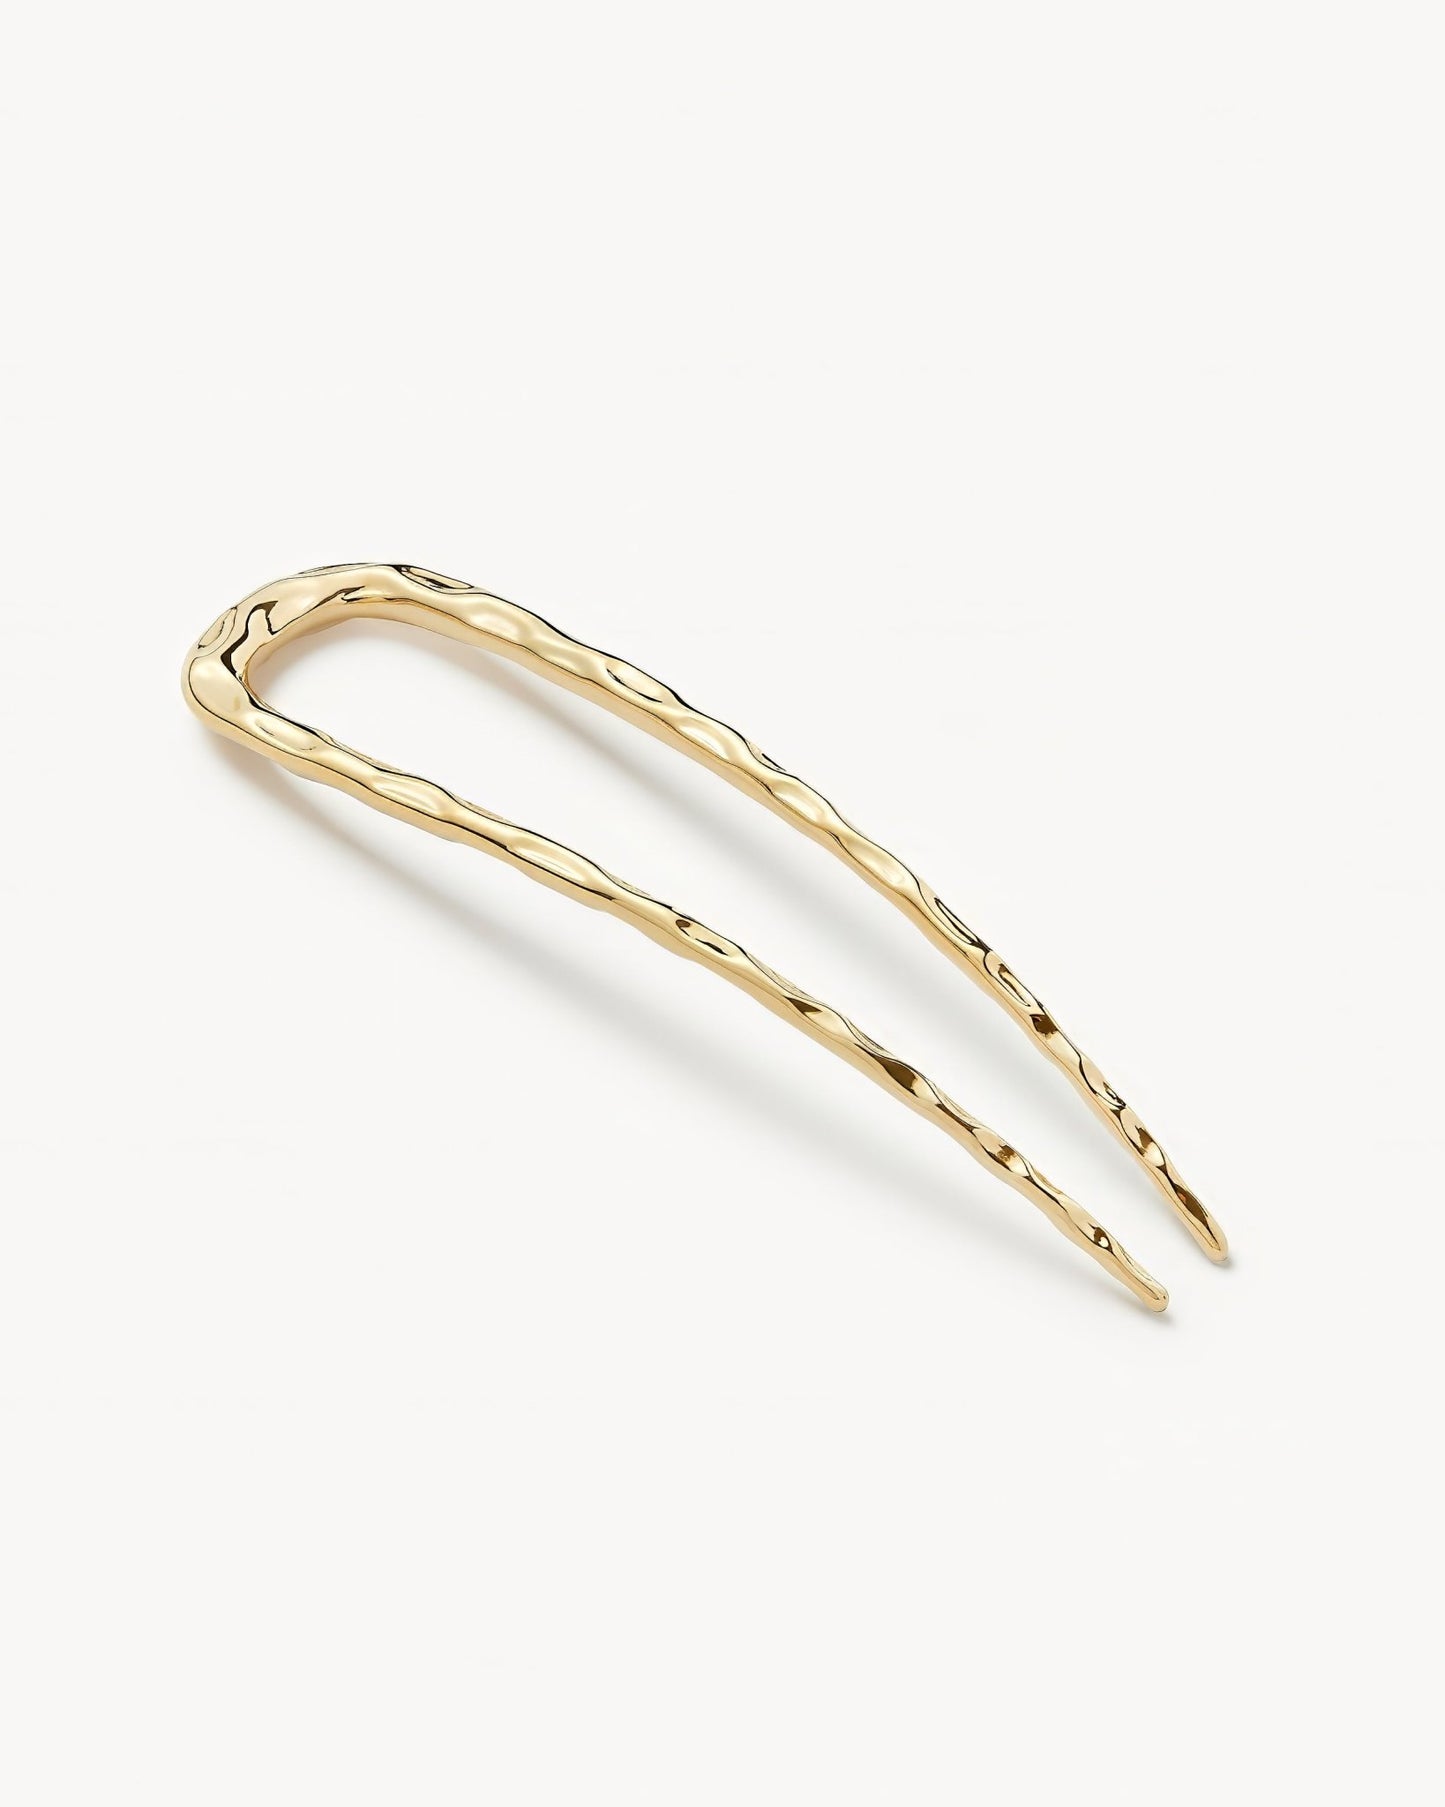 Midi Wavy French Hair Pin in Gold 